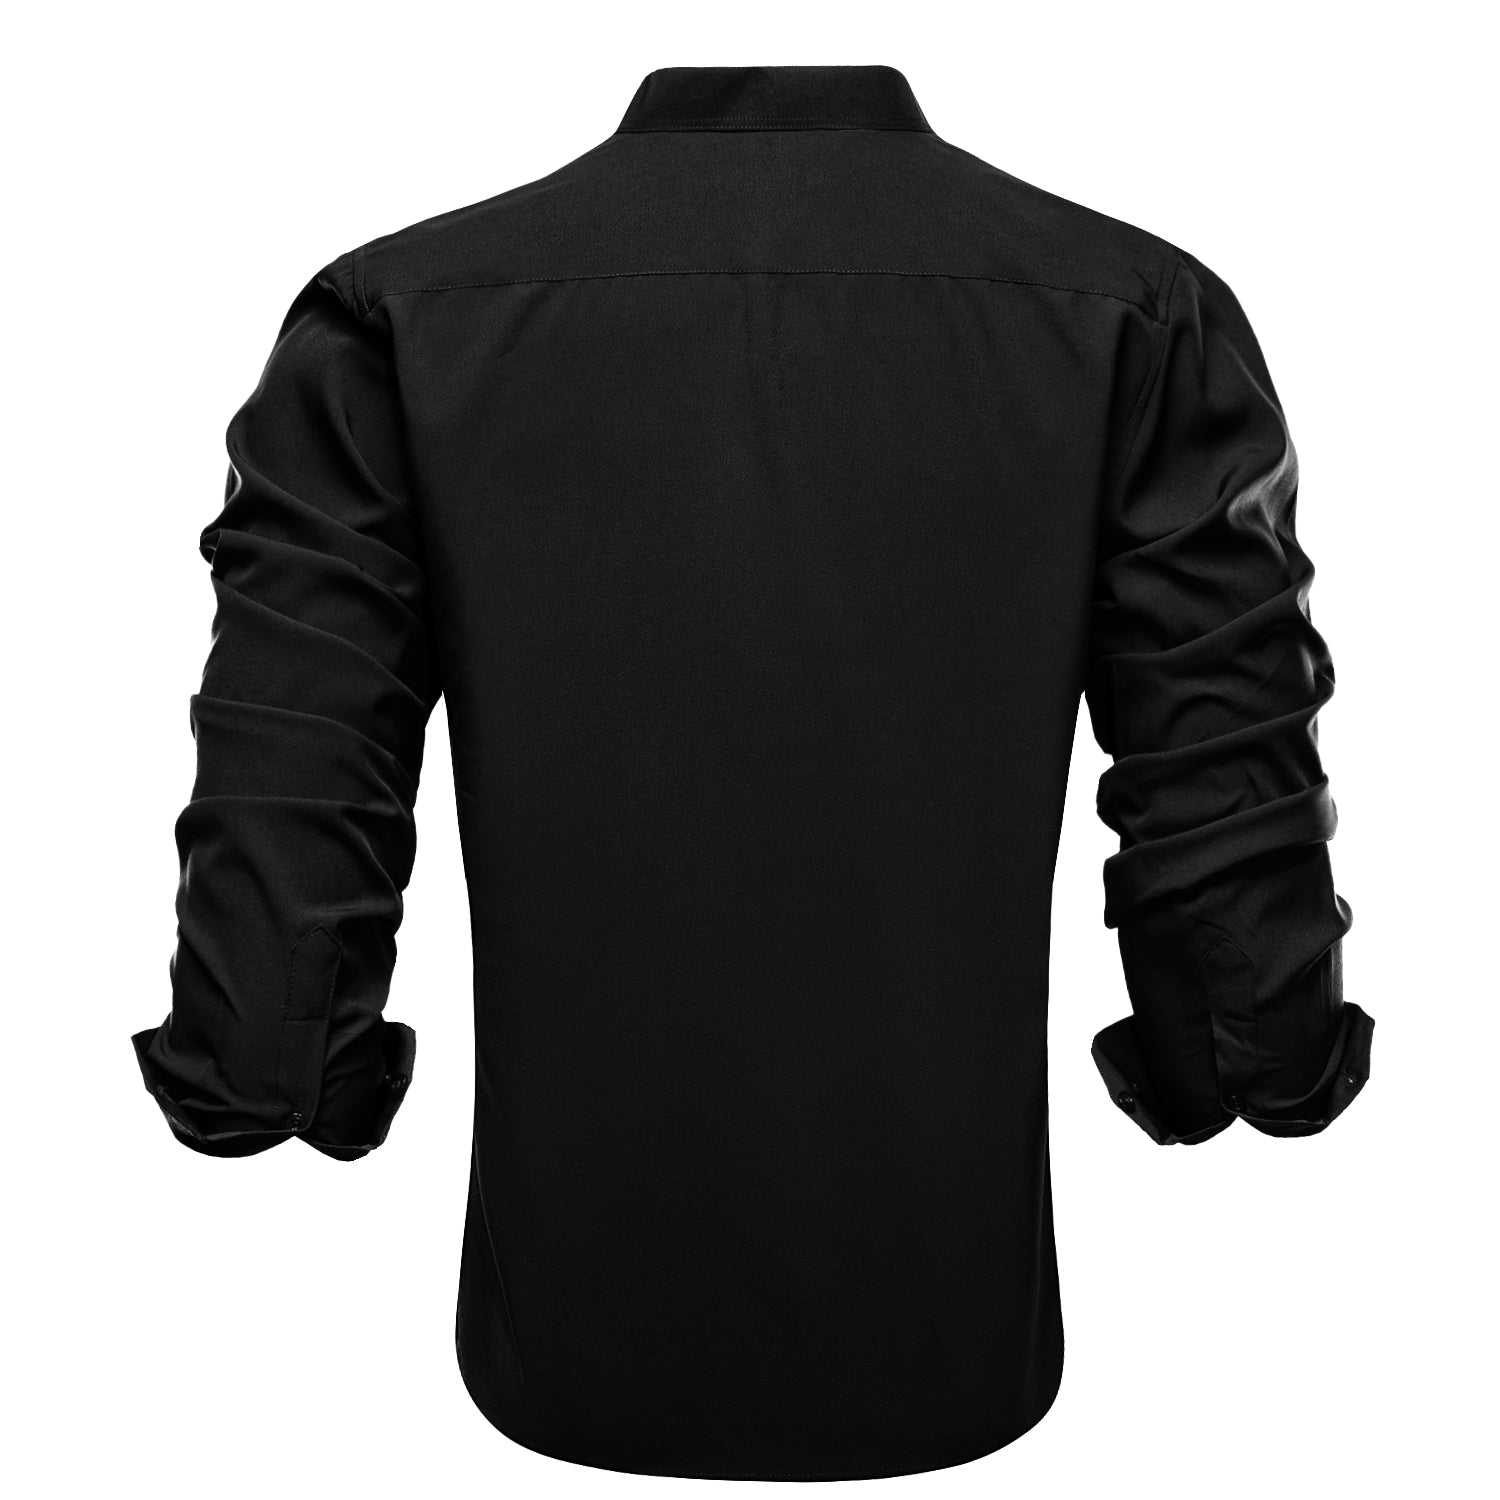 Black Solid Men's Long Sleeve Dress Shirt